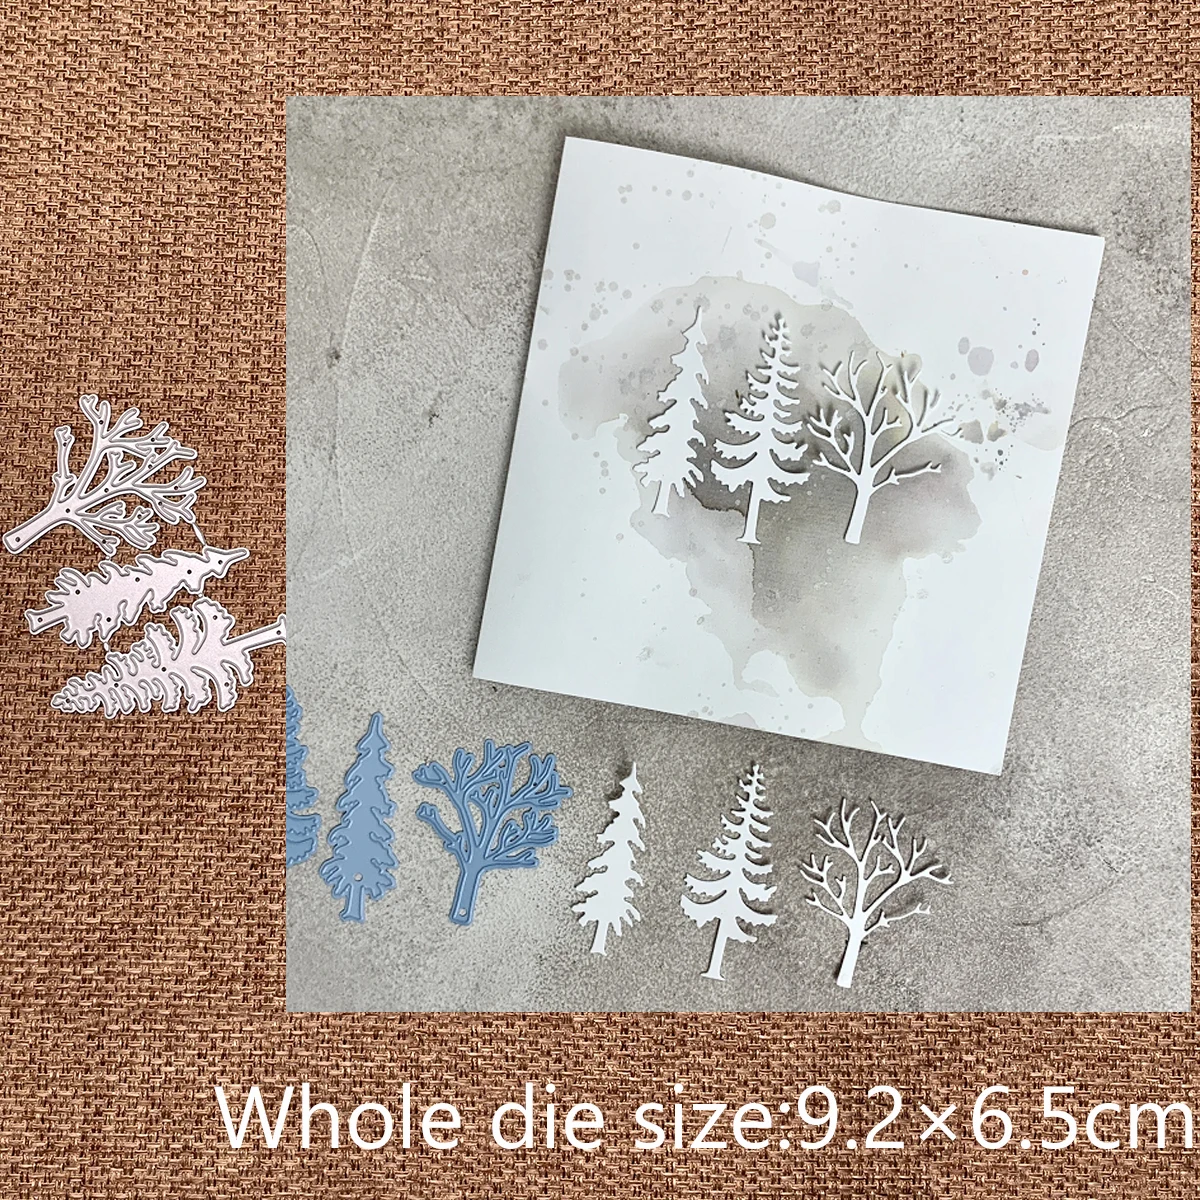 

New Design Craft Metal stencil mold Cutting Dies 3pcs trees decoration scrapbook die cuts Album Paper Card Craft Embossing